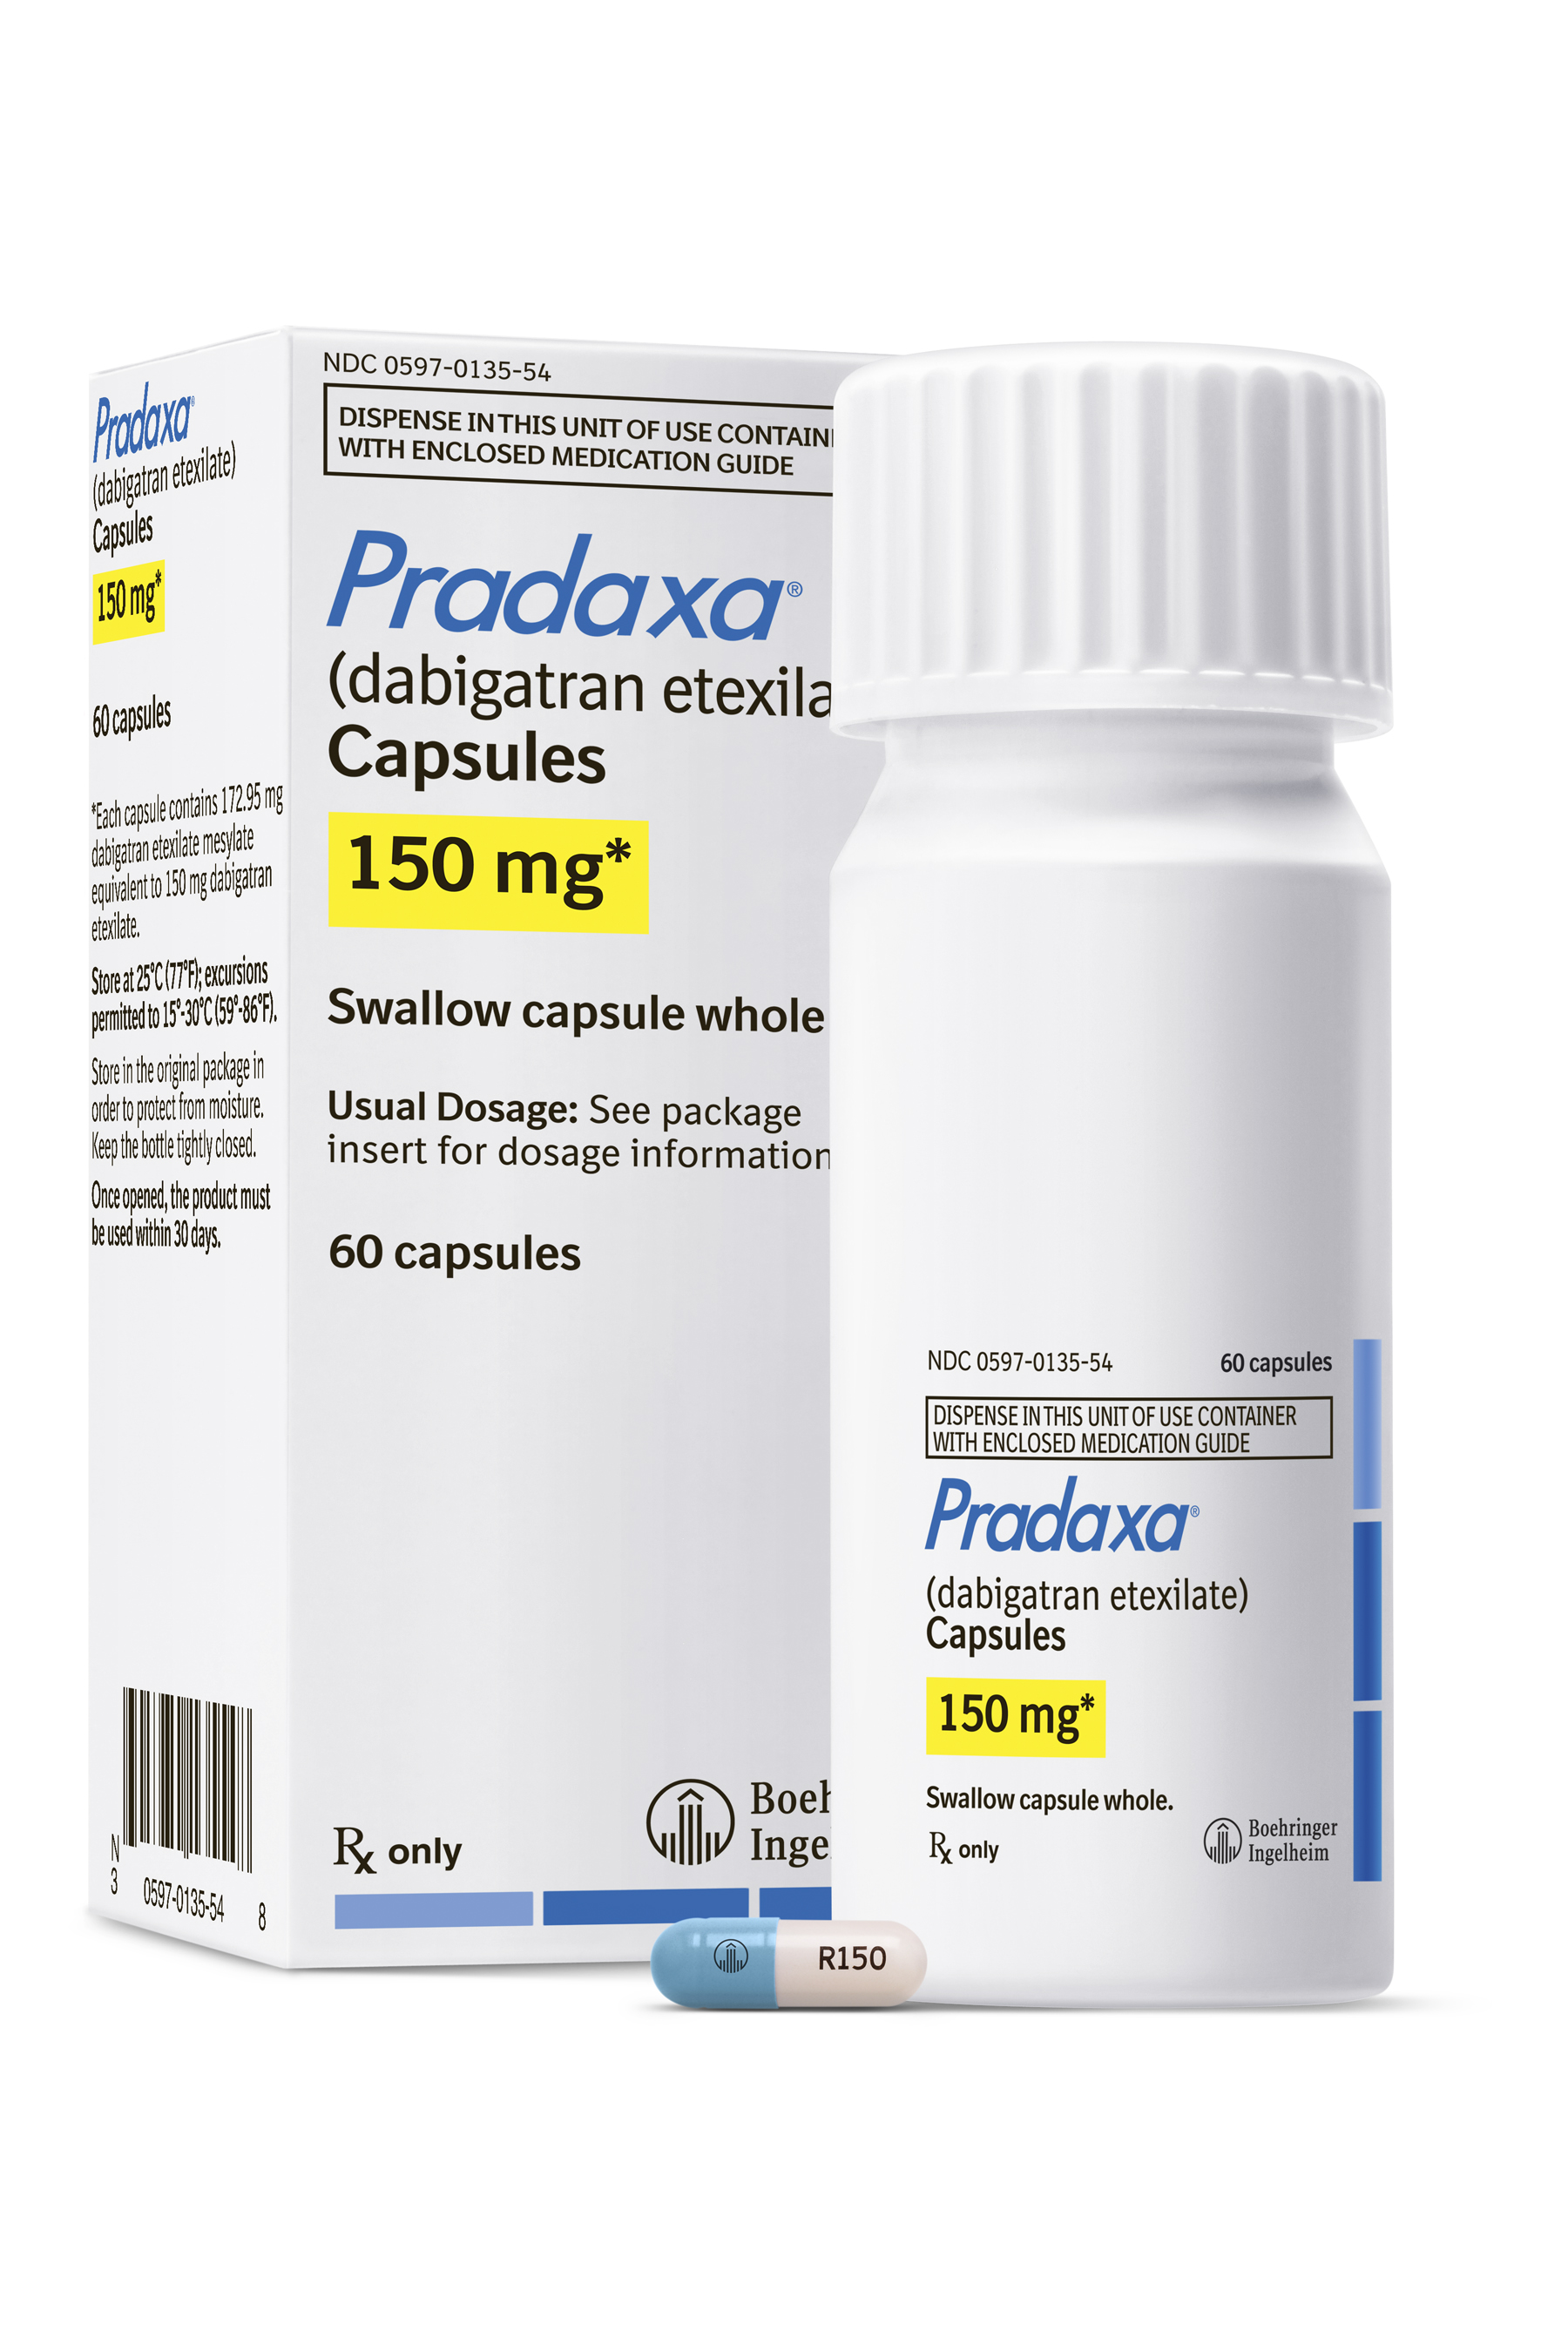 Pradaxa Linked to 60% More Major Bleeding than Warfarin